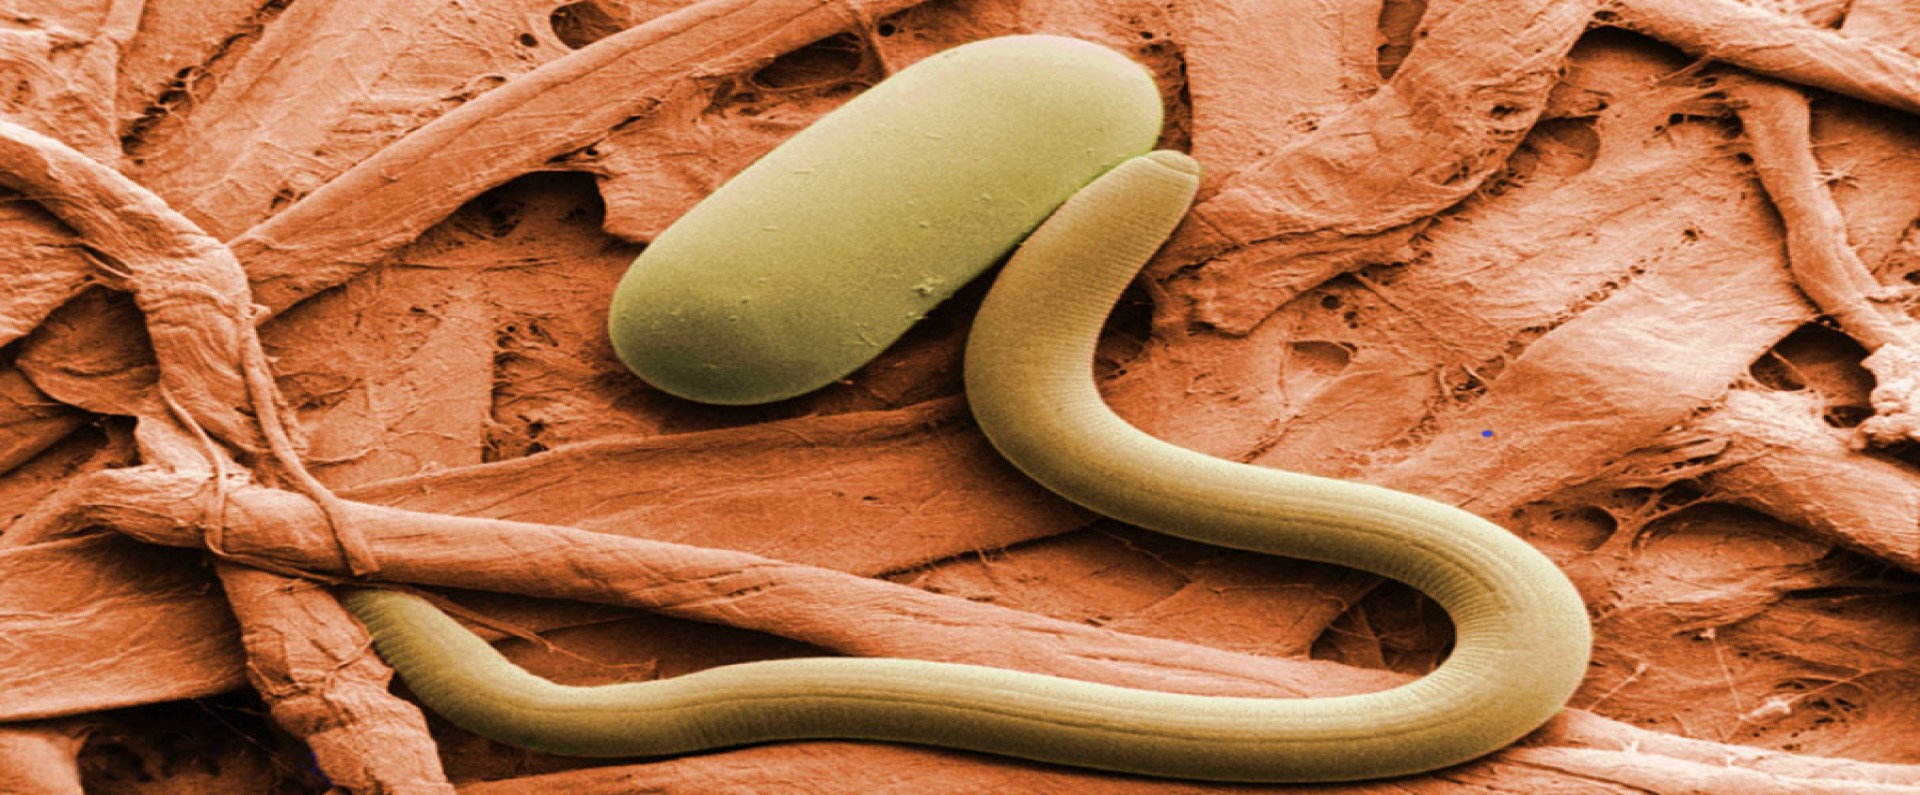 A soybean cyst nematode